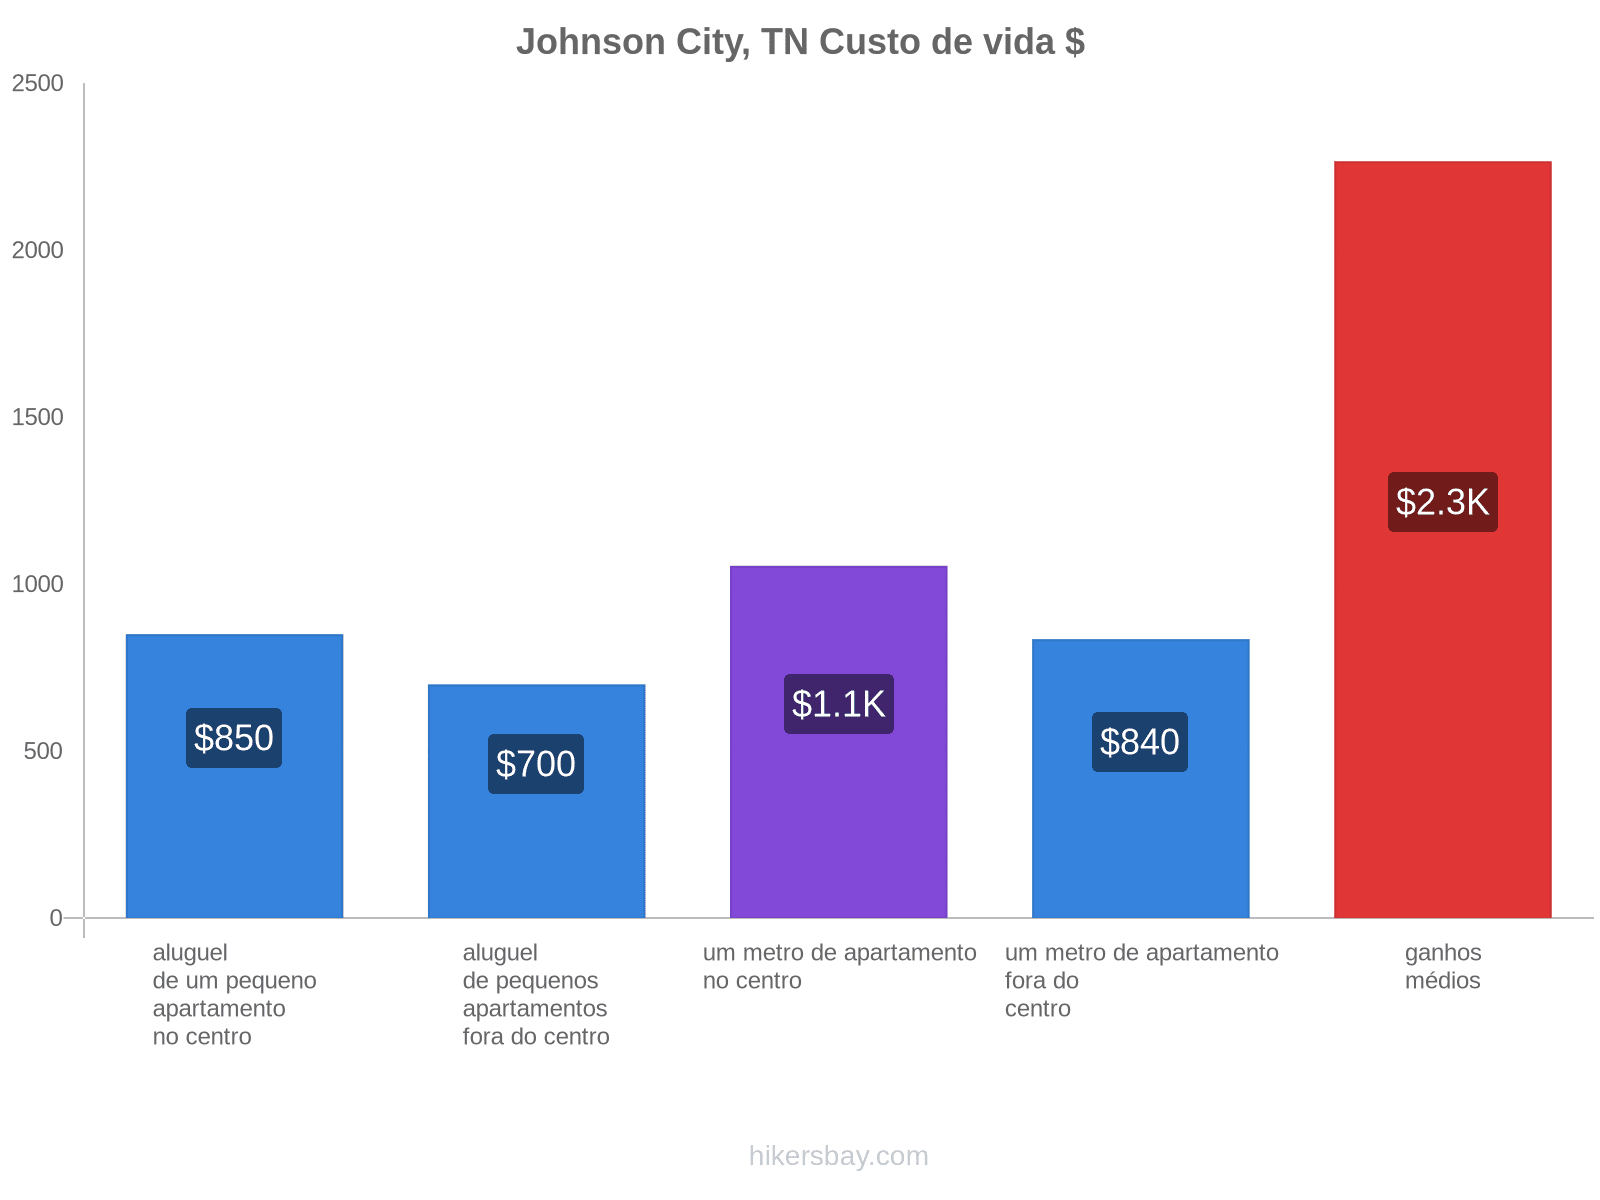 Johnson City, TN custo de vida hikersbay.com